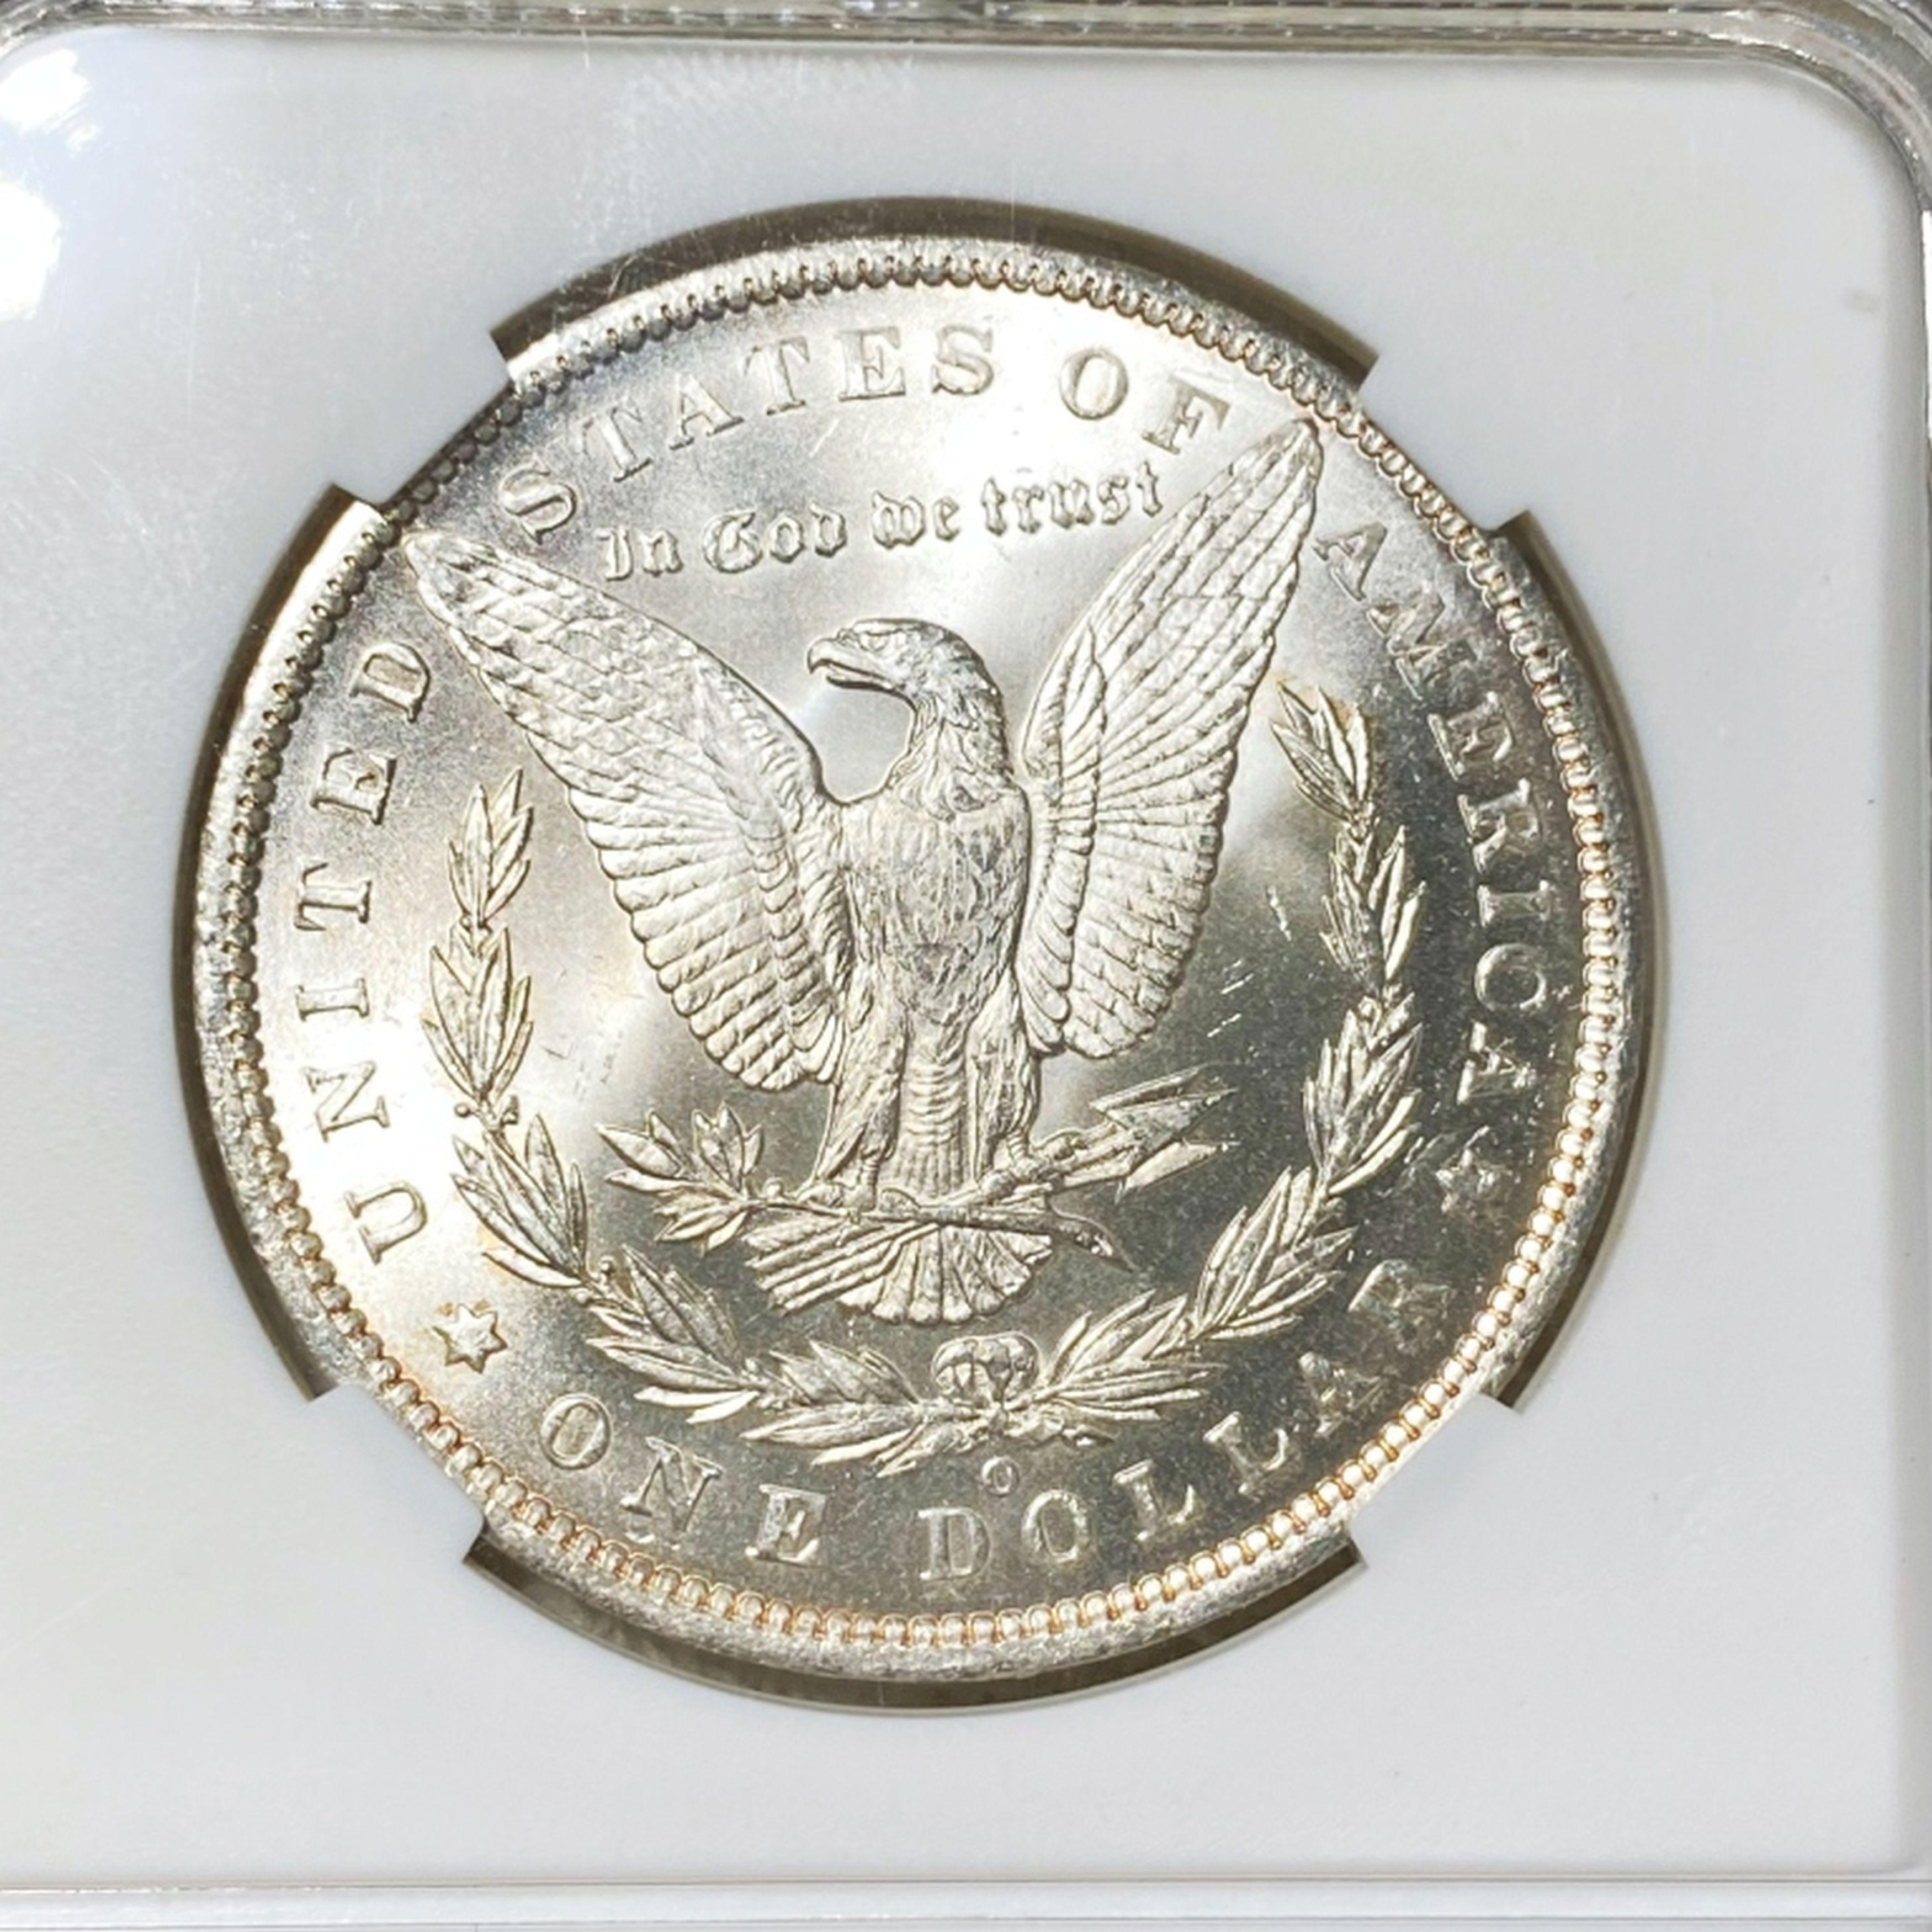 1890-O Morgan Silver Dollar PGA - MS64